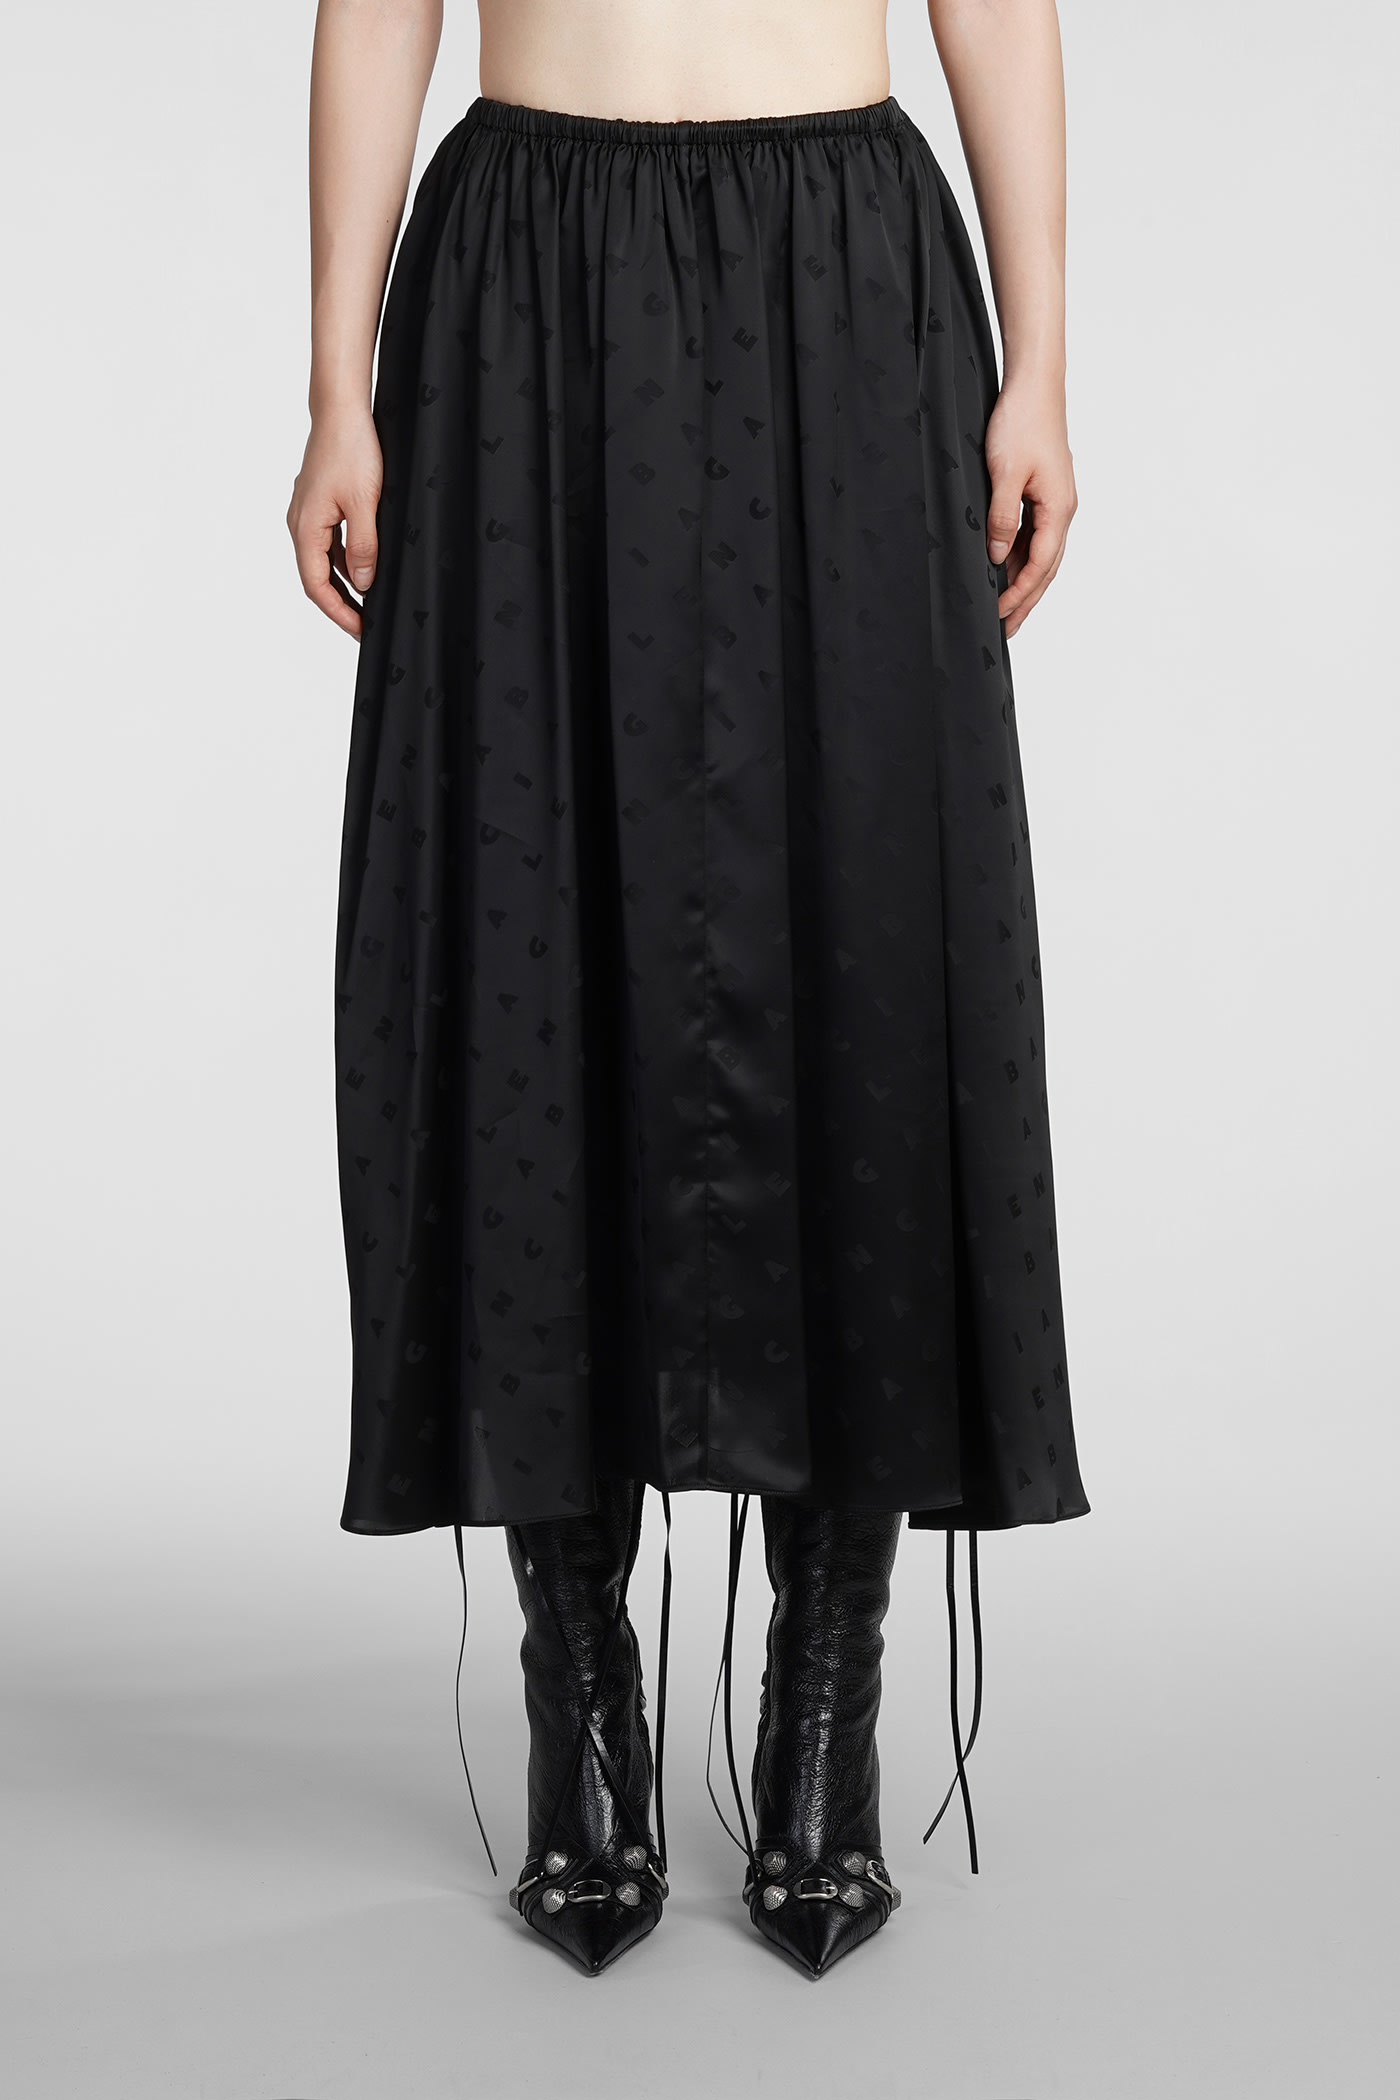 Balenciaga Skirt In Black Viscose